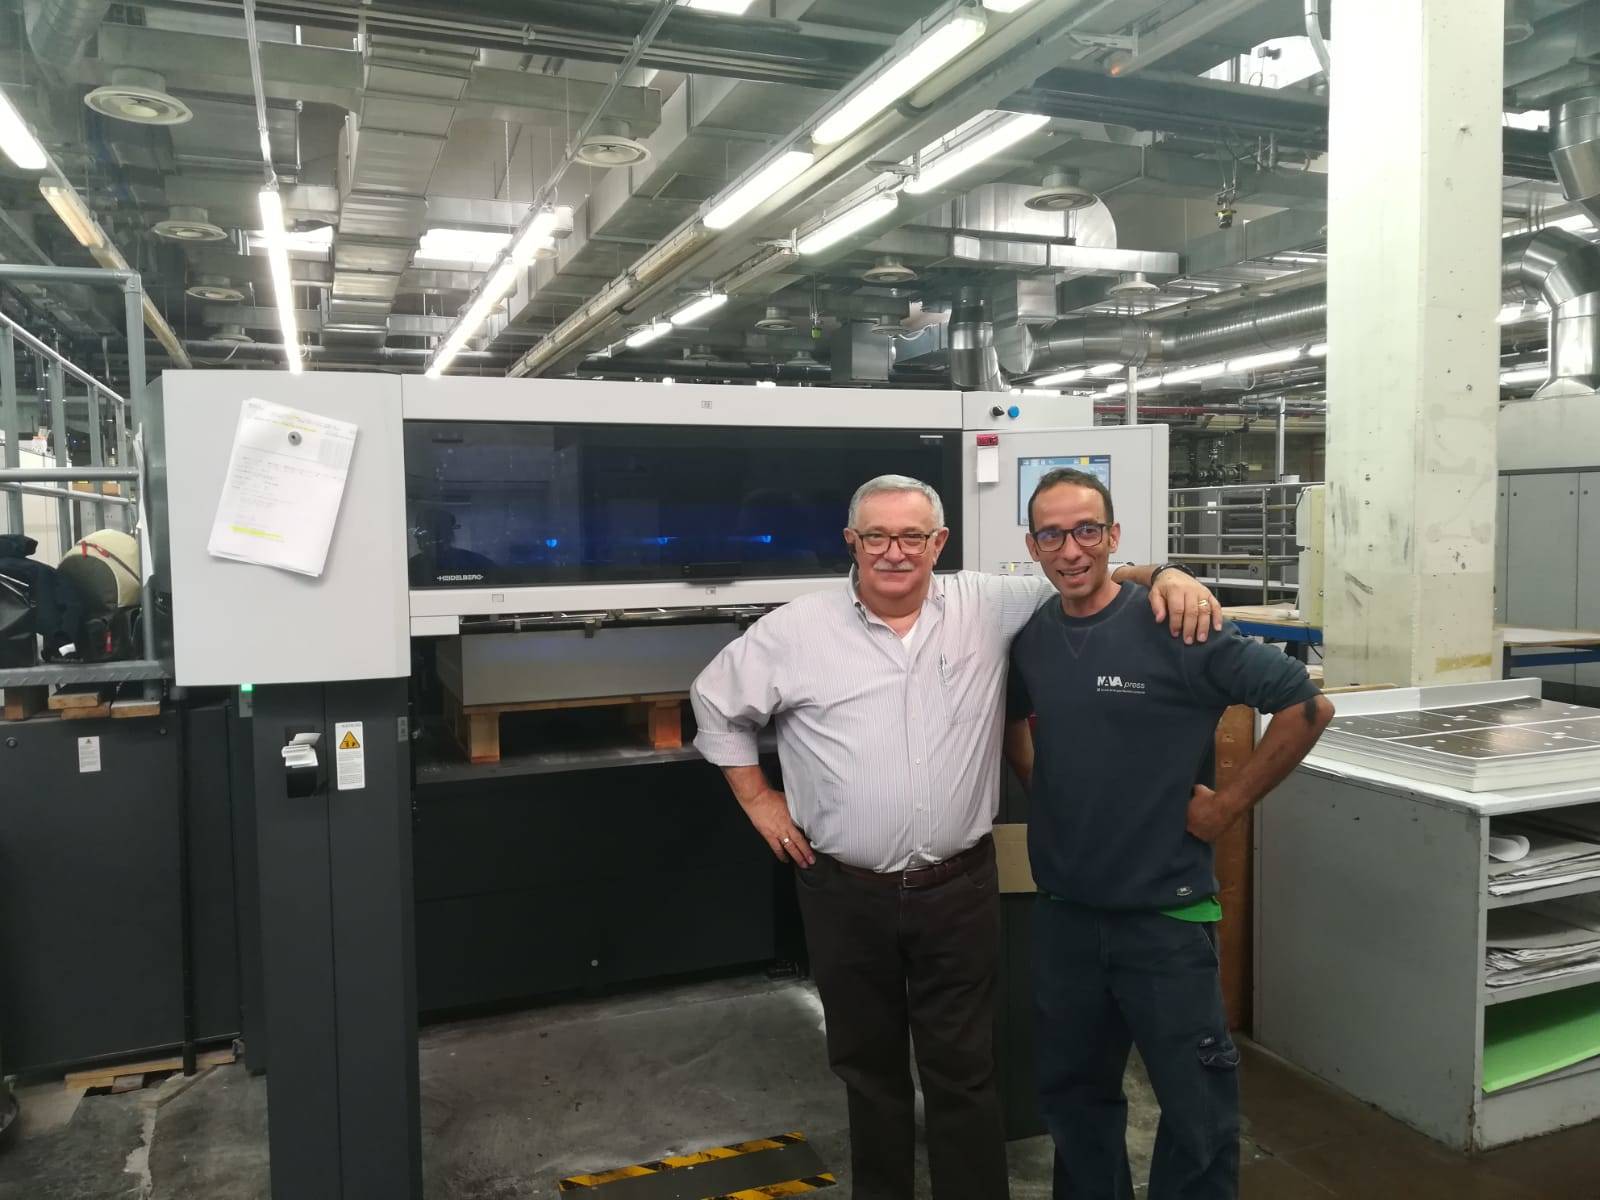 M. Cavicchioli Production Manager Nava Press Milan with printer